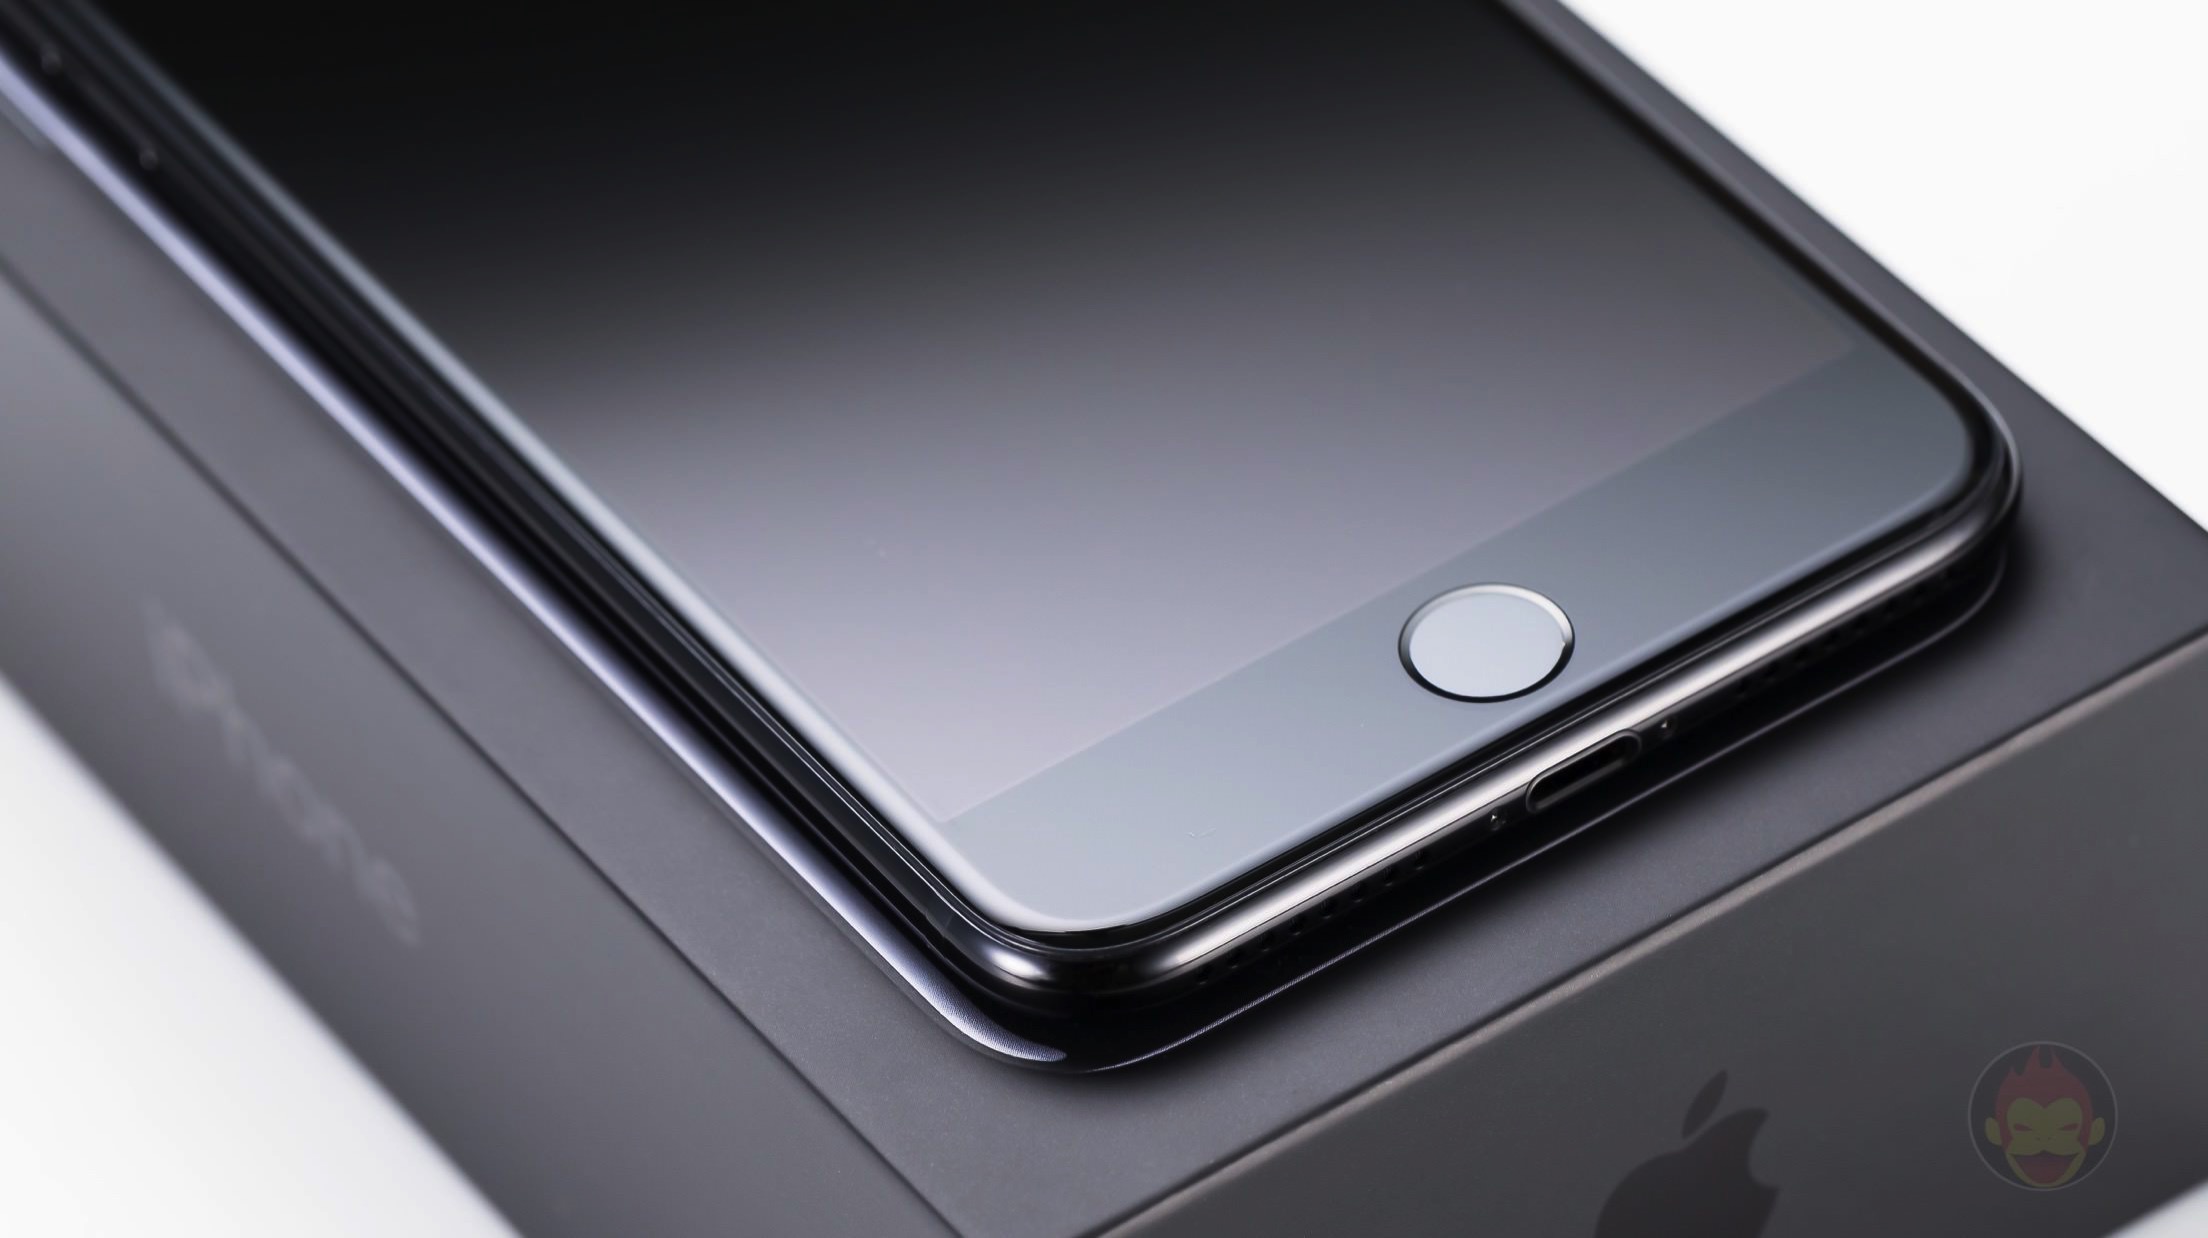 iPhone-7-Plus-Jet-Black-Design-review-11.jpg